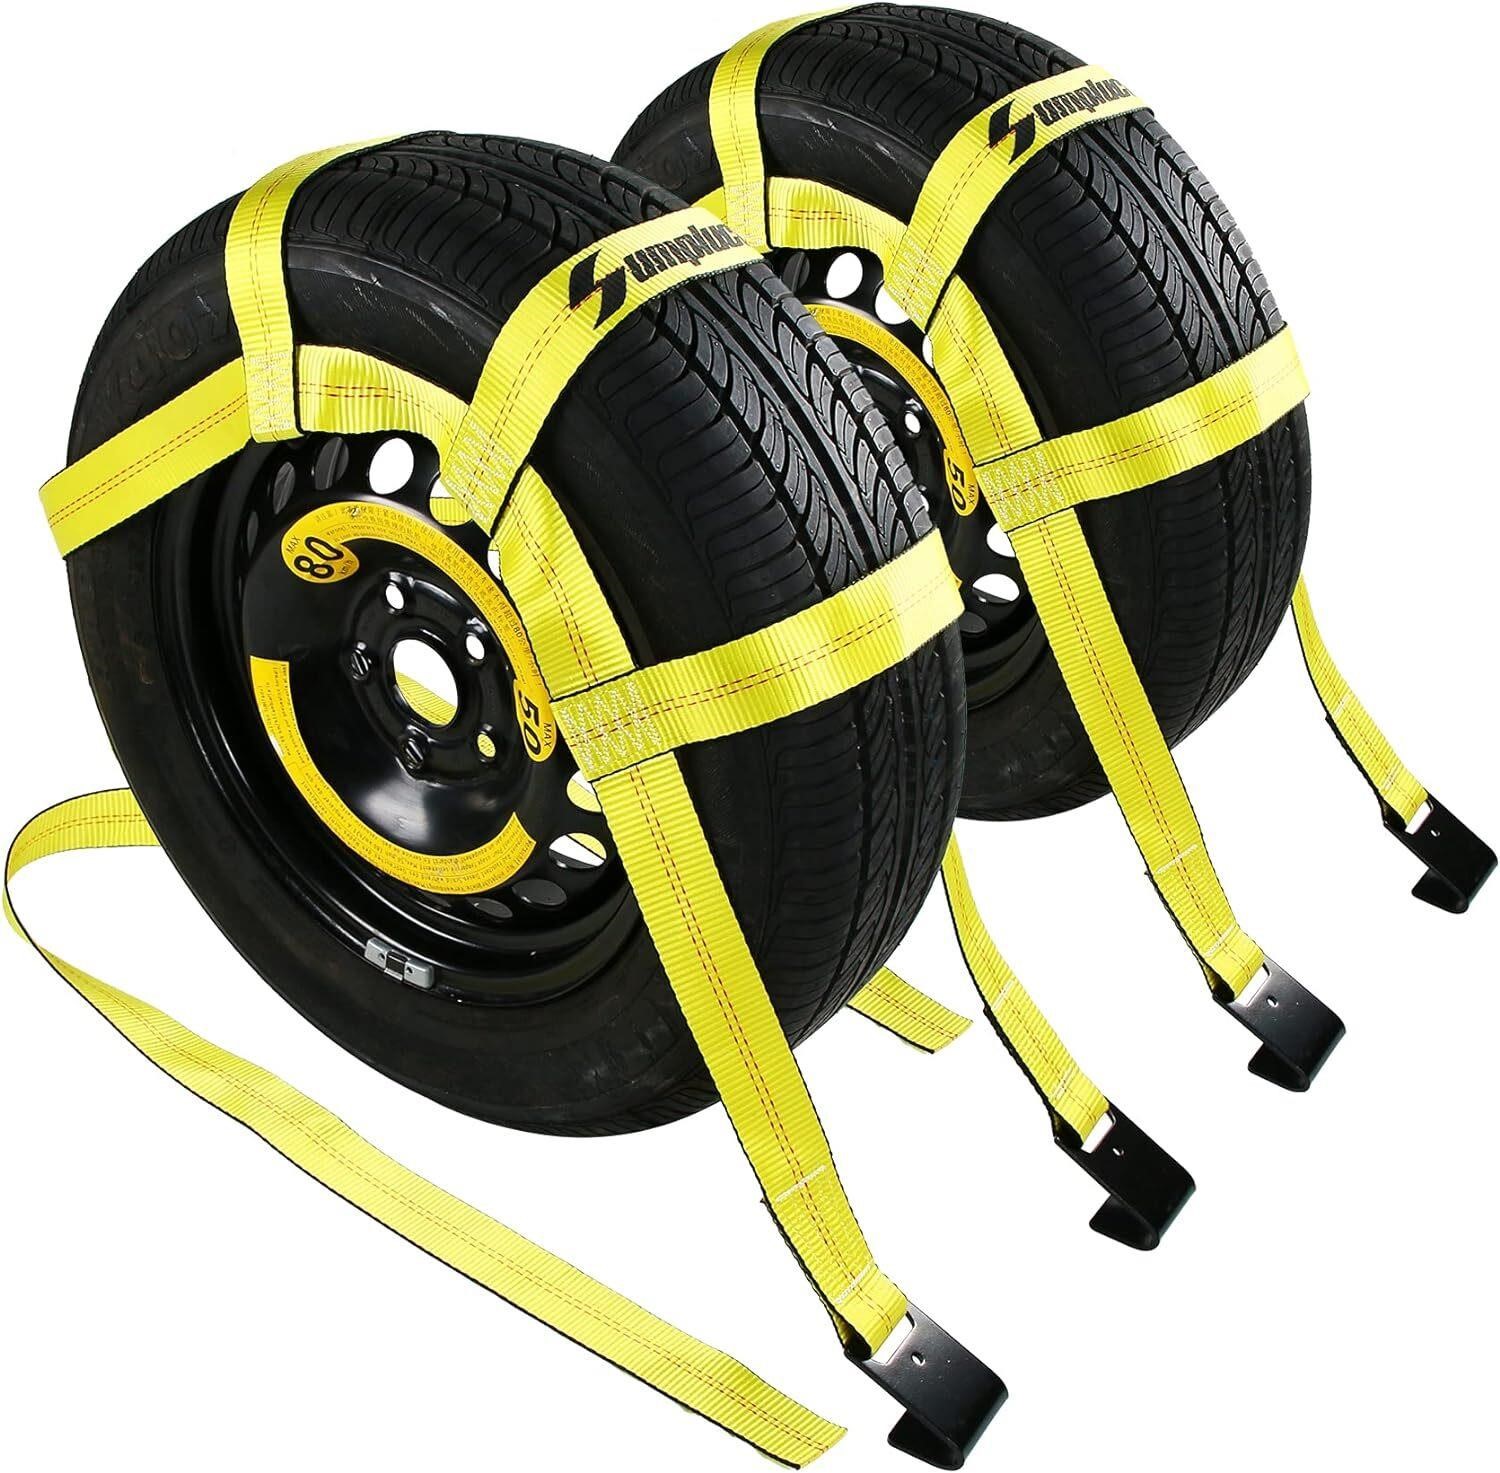 $50  2Pk Tow Straps  Fits 14-19 Tires  Yellow